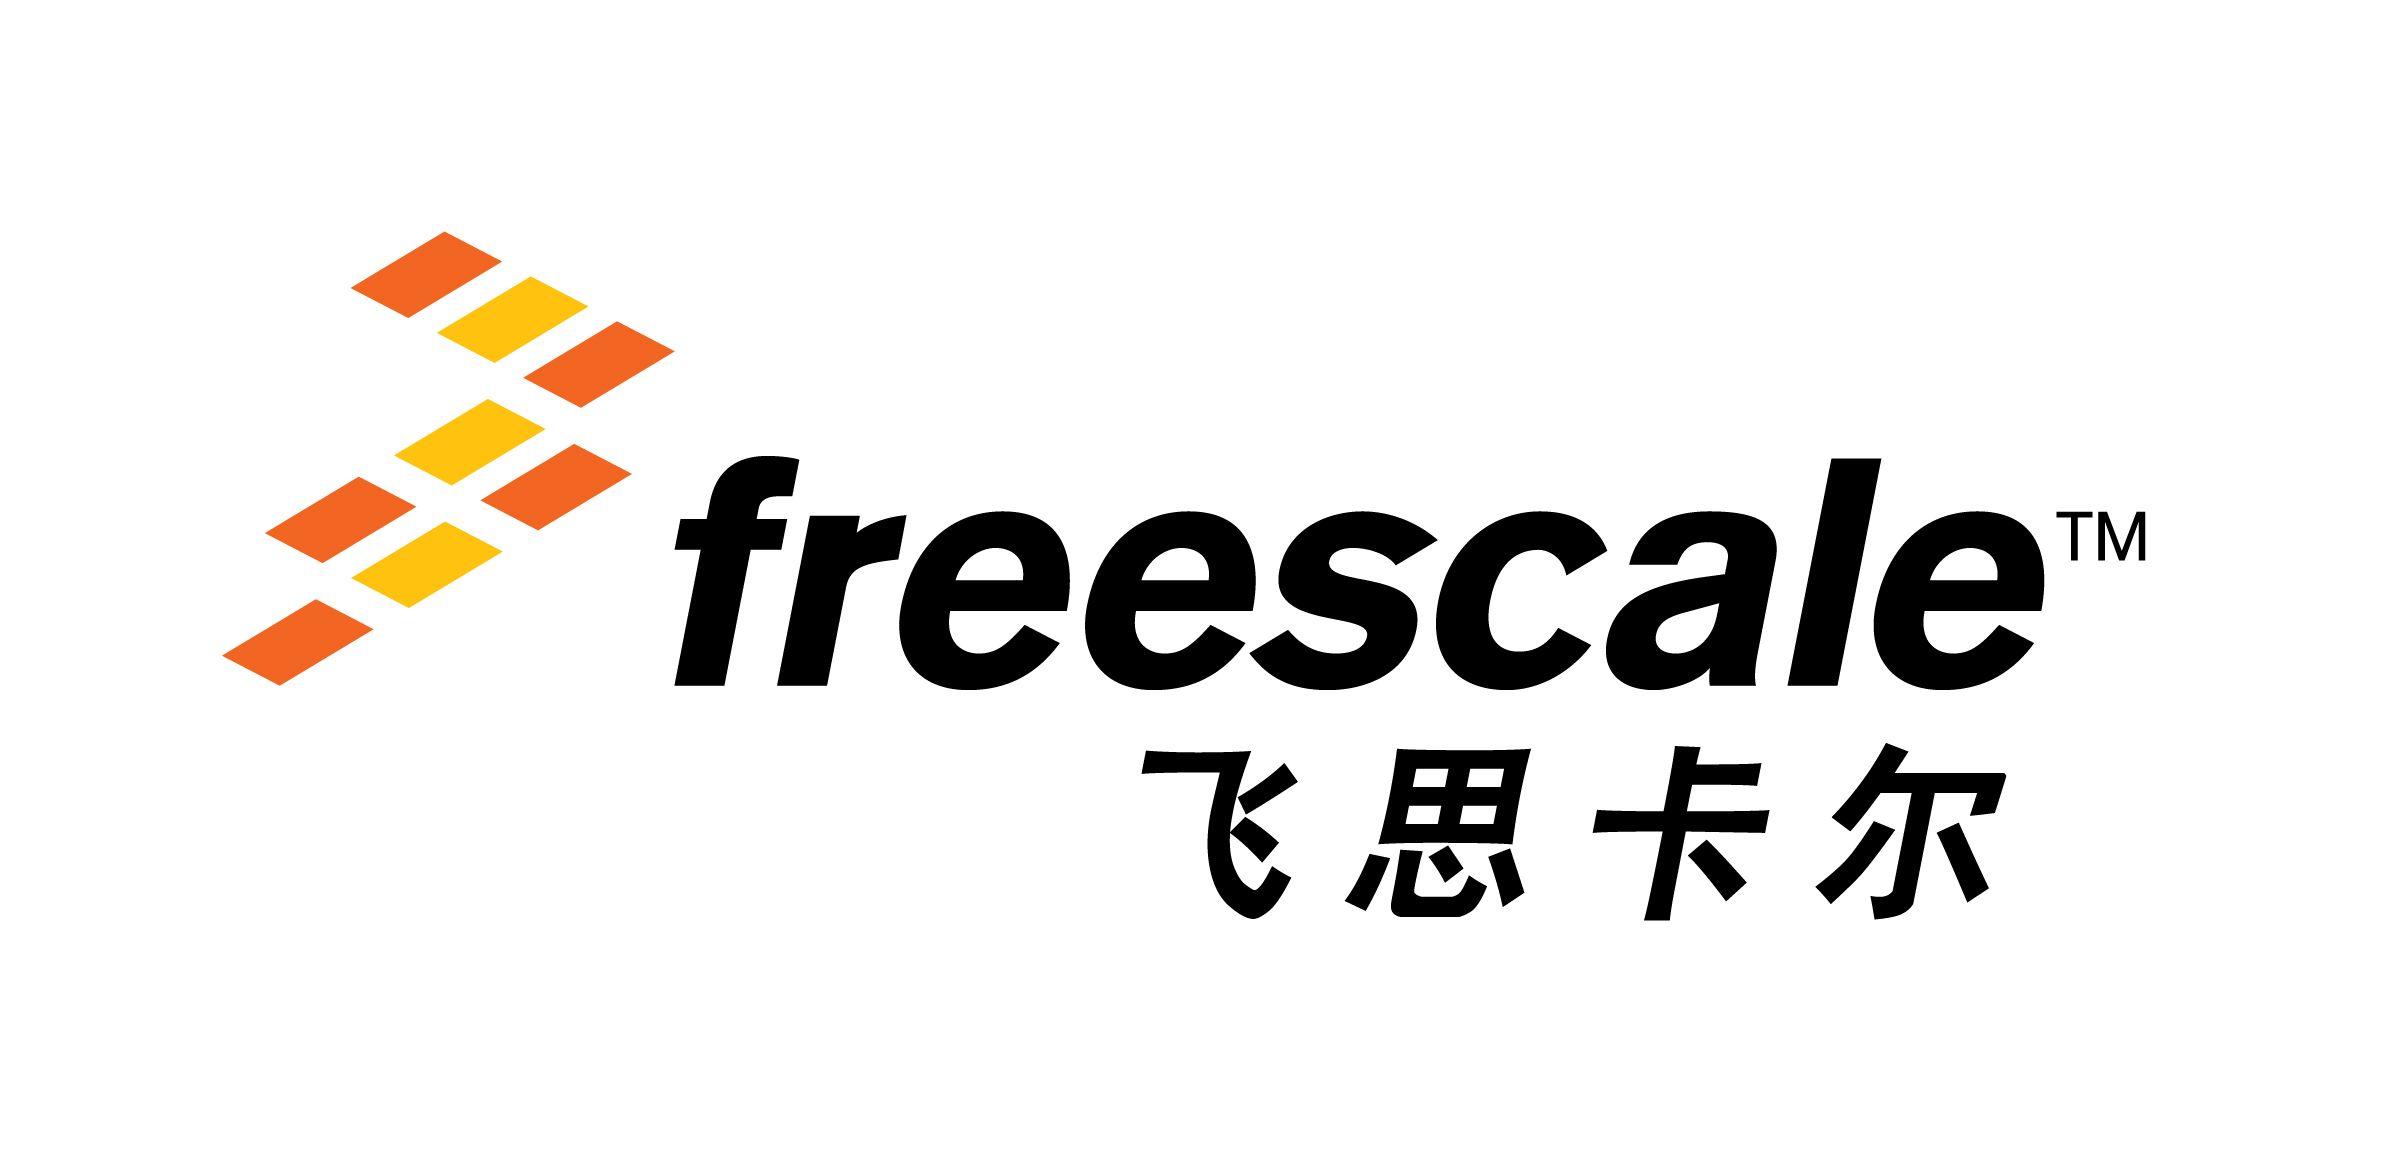 Freescale Logo - File:Freescale Logo TM.jpg - Wikimedia Commons